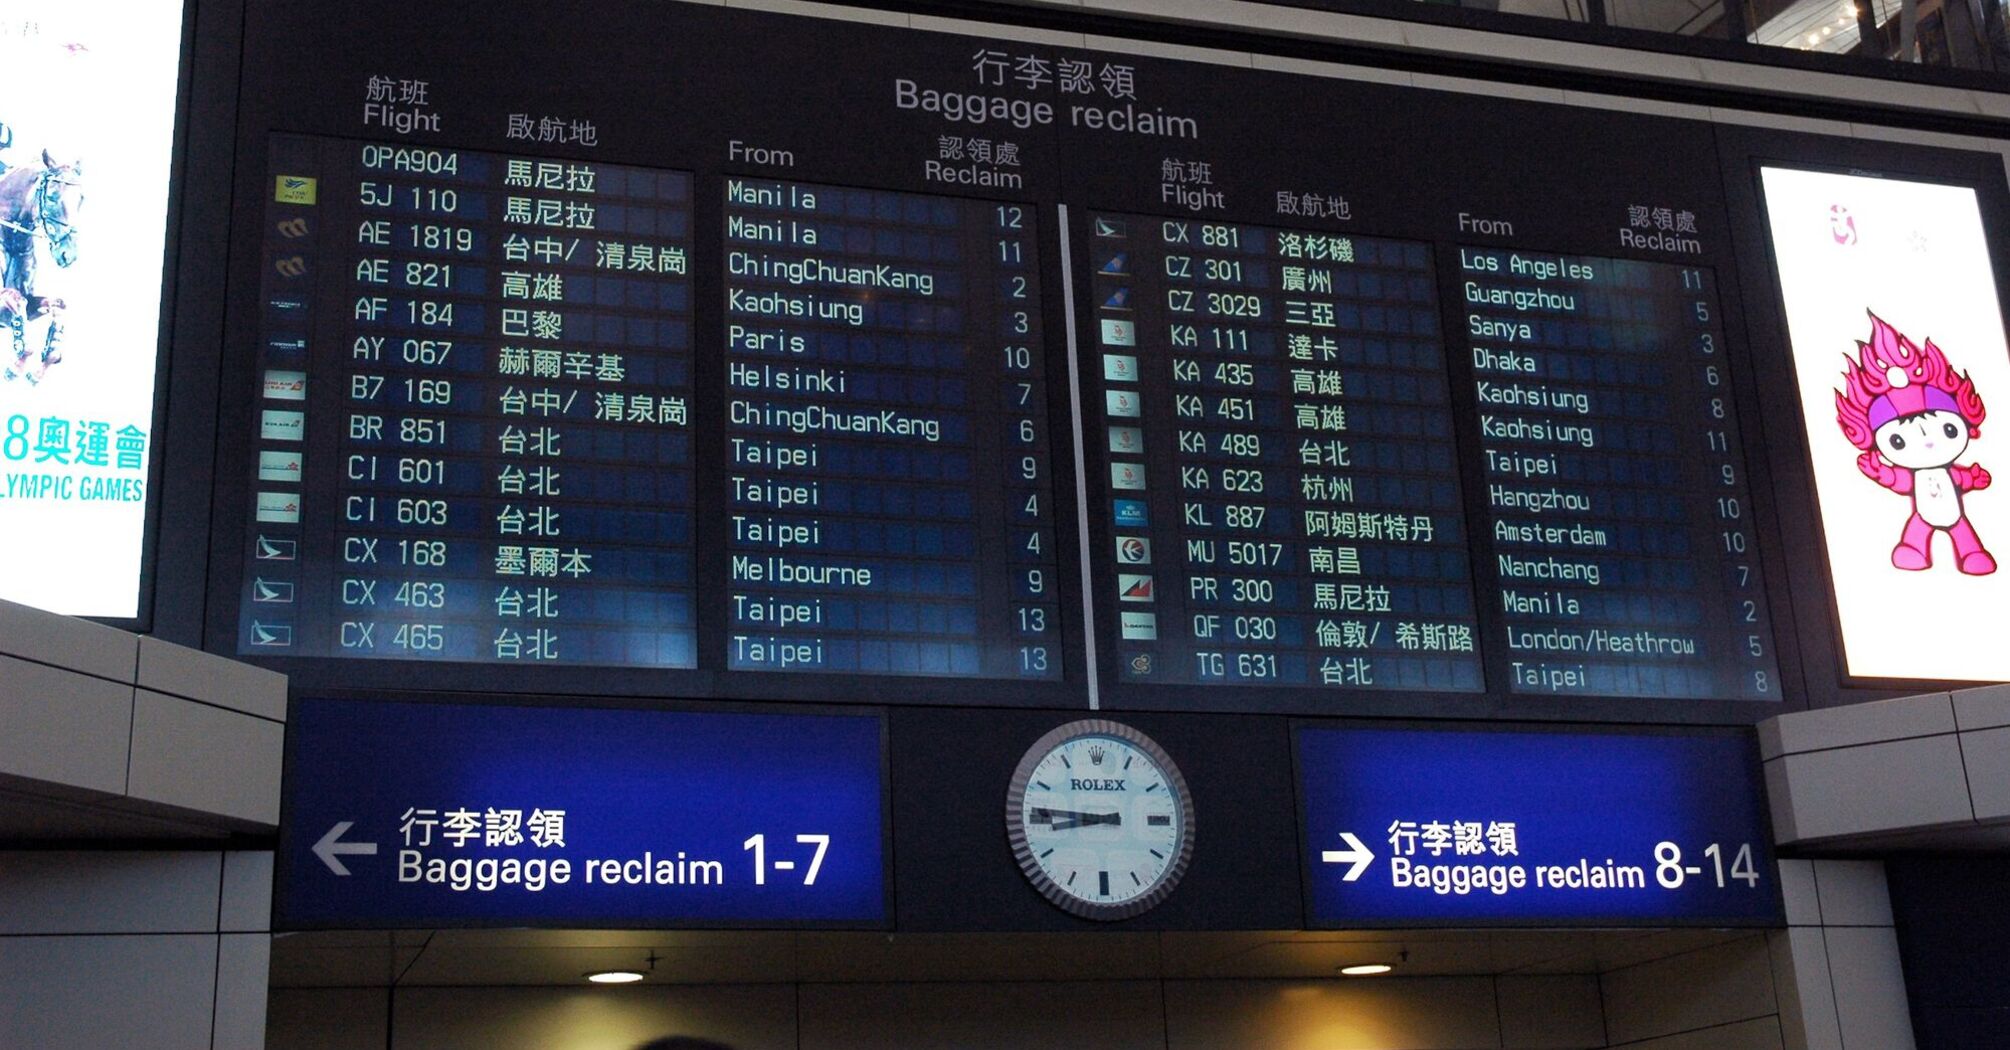 Baggage reclaim display screens at Hong Kong International Airport